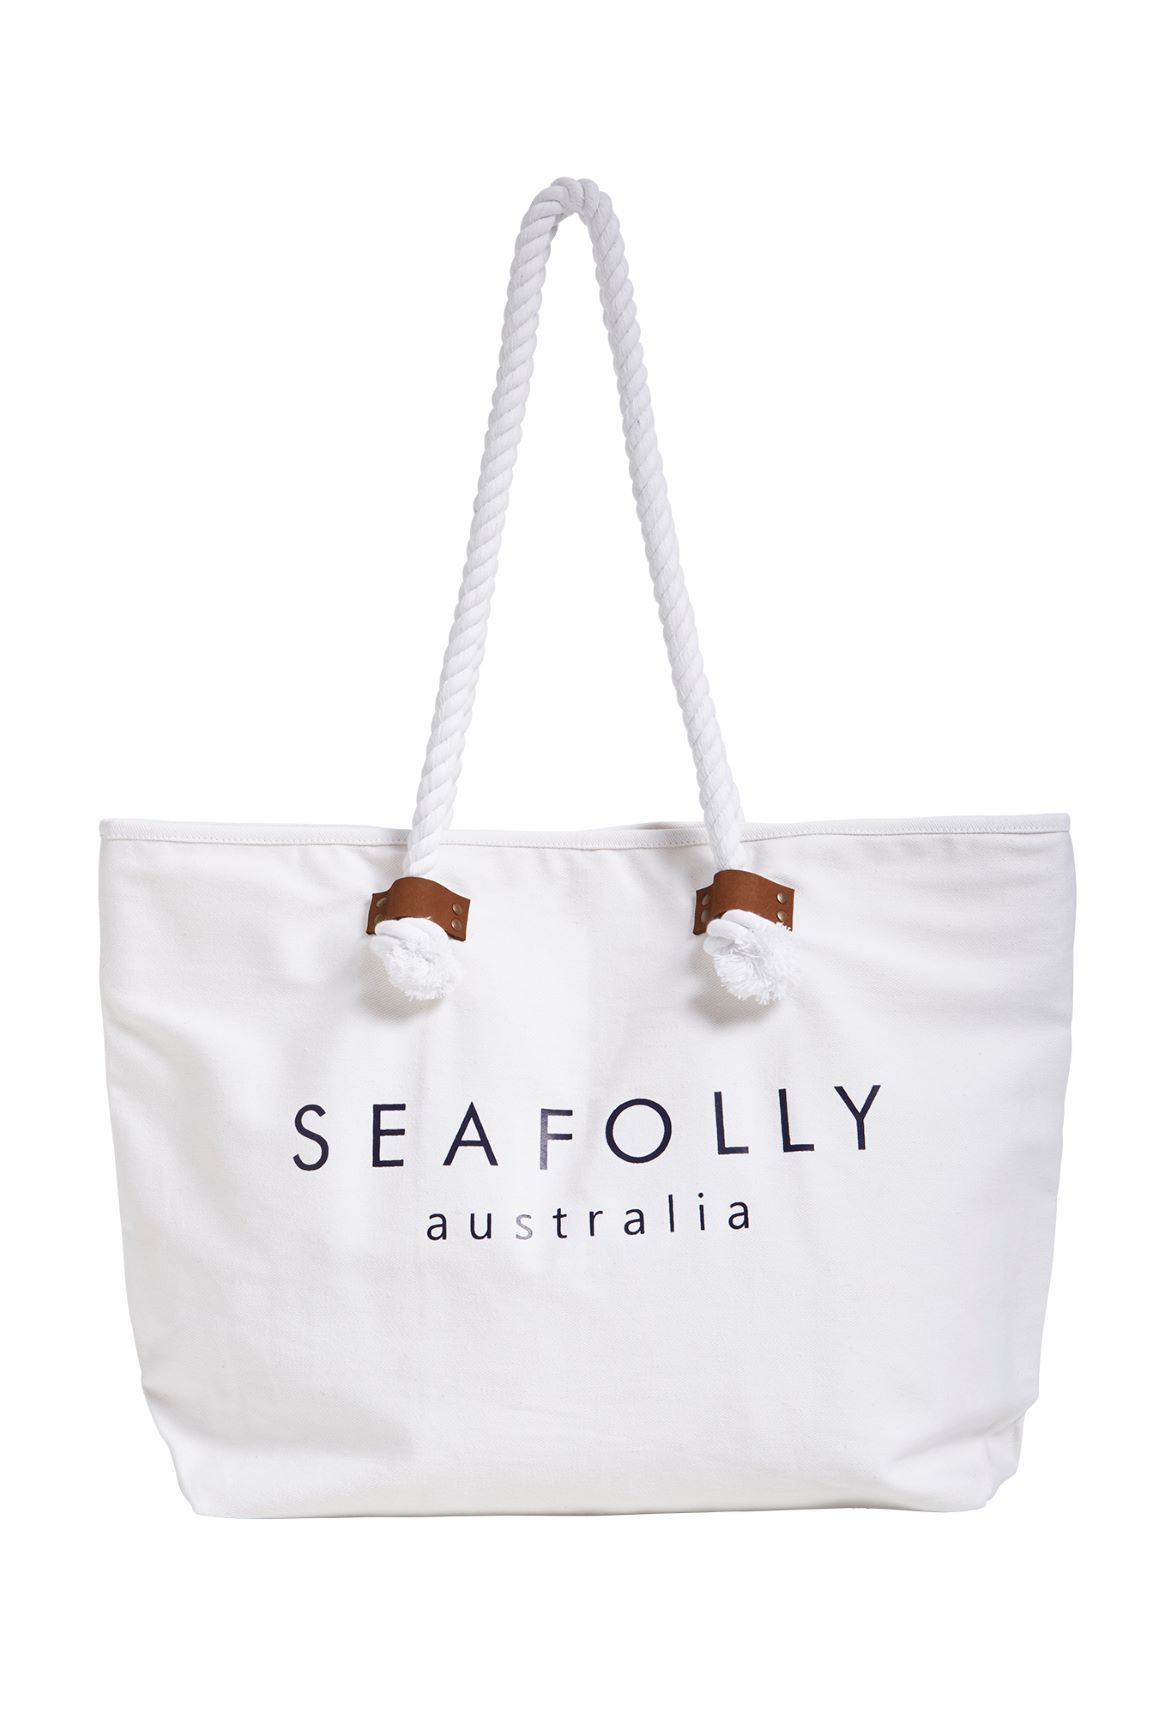 Seafolly CARRIED AWAY CROCHET BAG - Tote bag - natural/beige - Zalando.co.uk